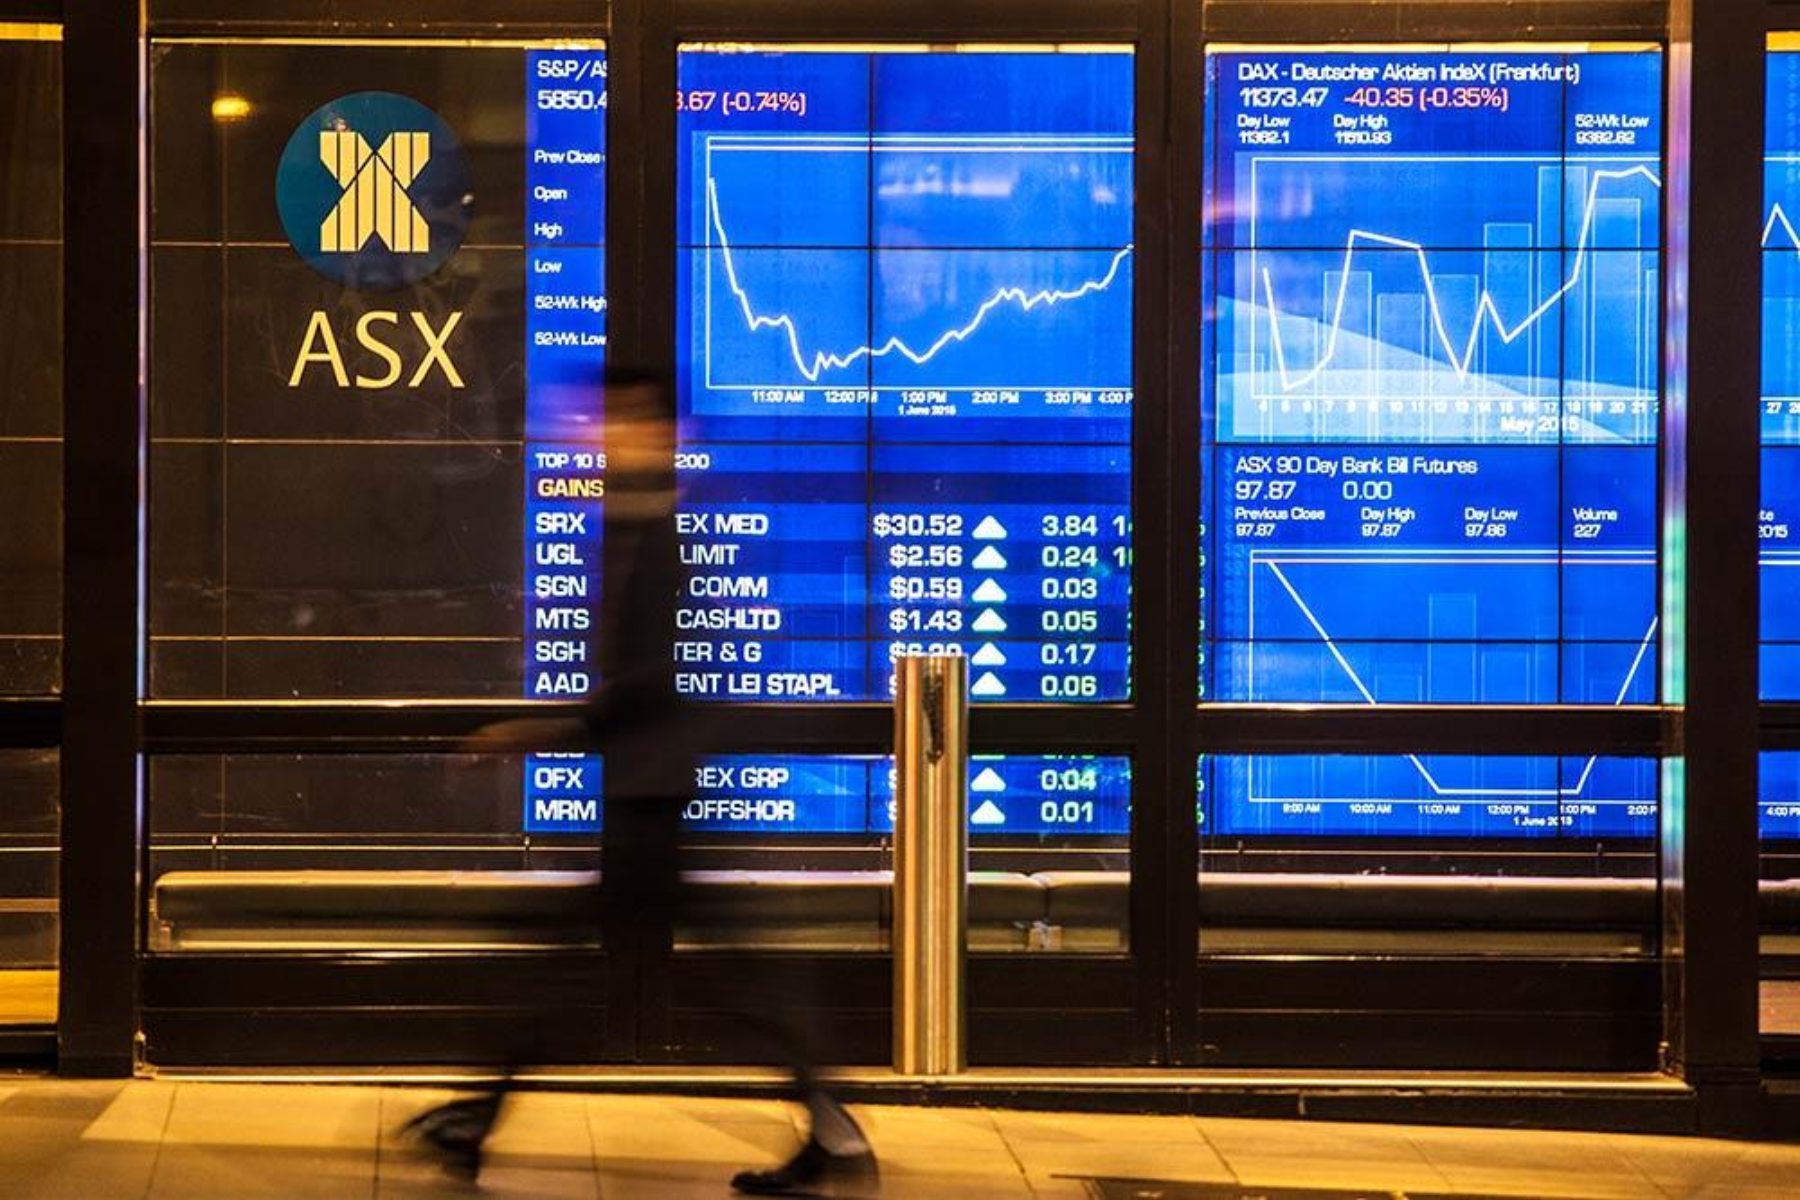 Investment tax accountant Adelaide capital gains tax - ASX screen